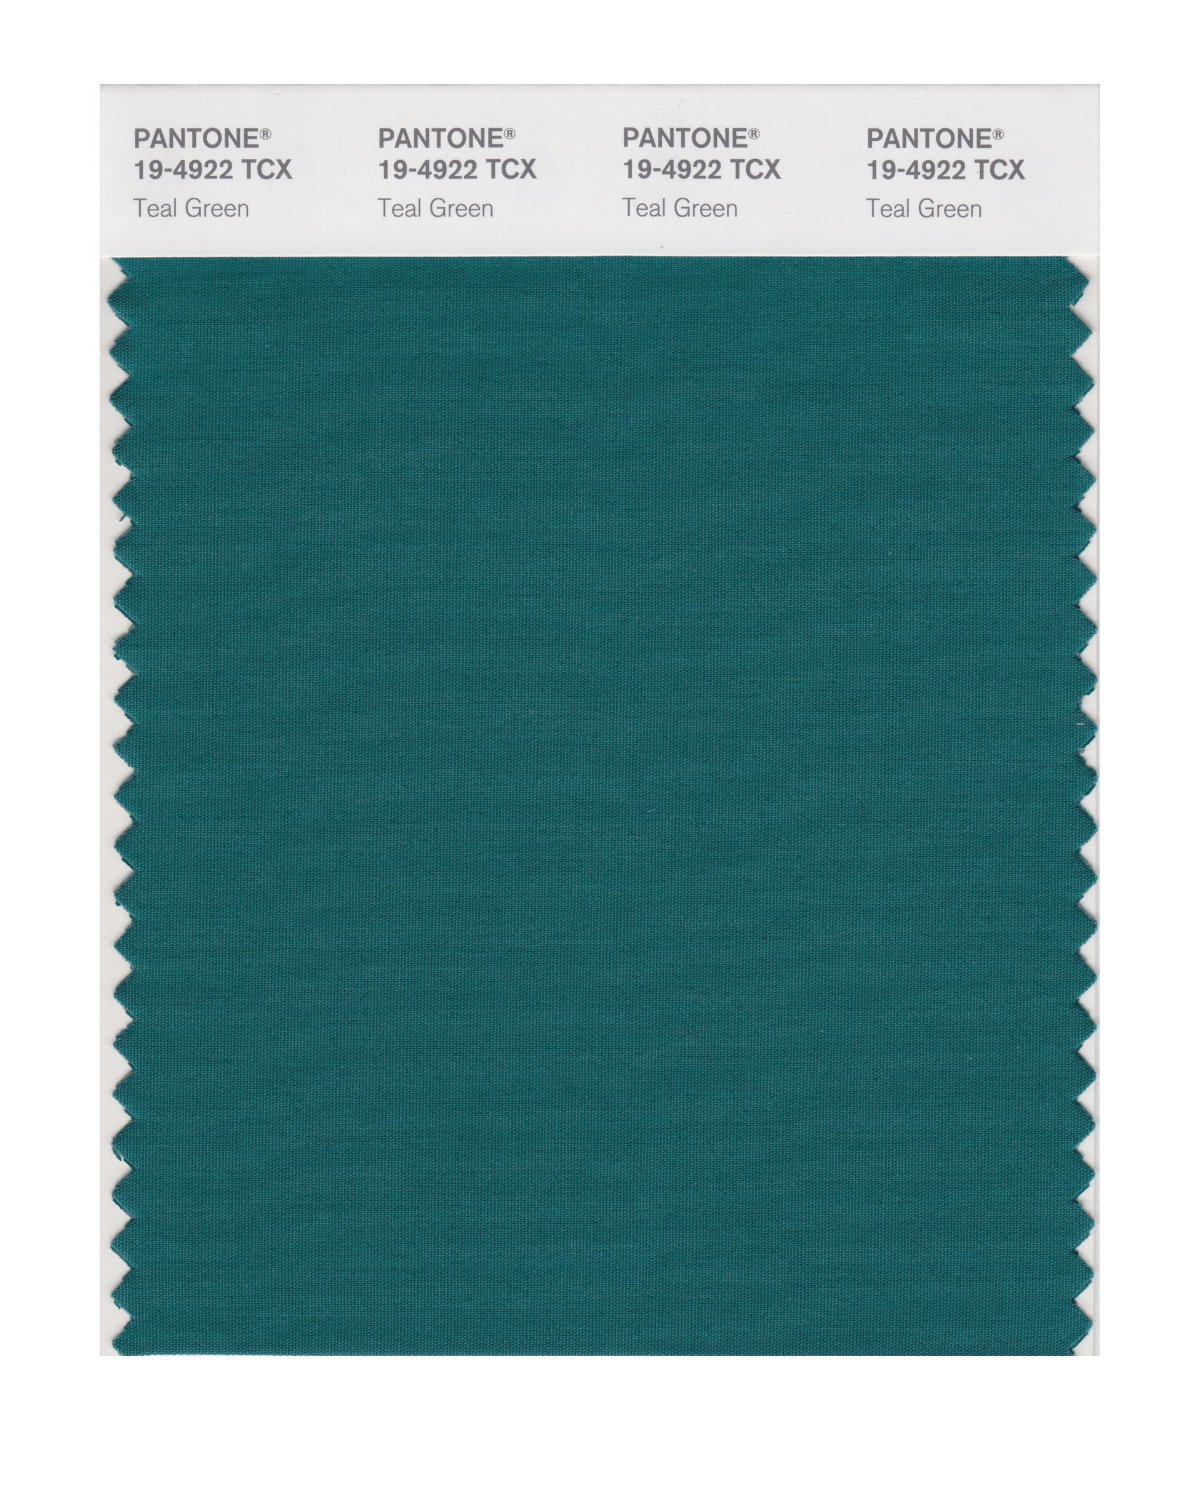 Pantone Cotton Swatch 19-4922 Teal Green